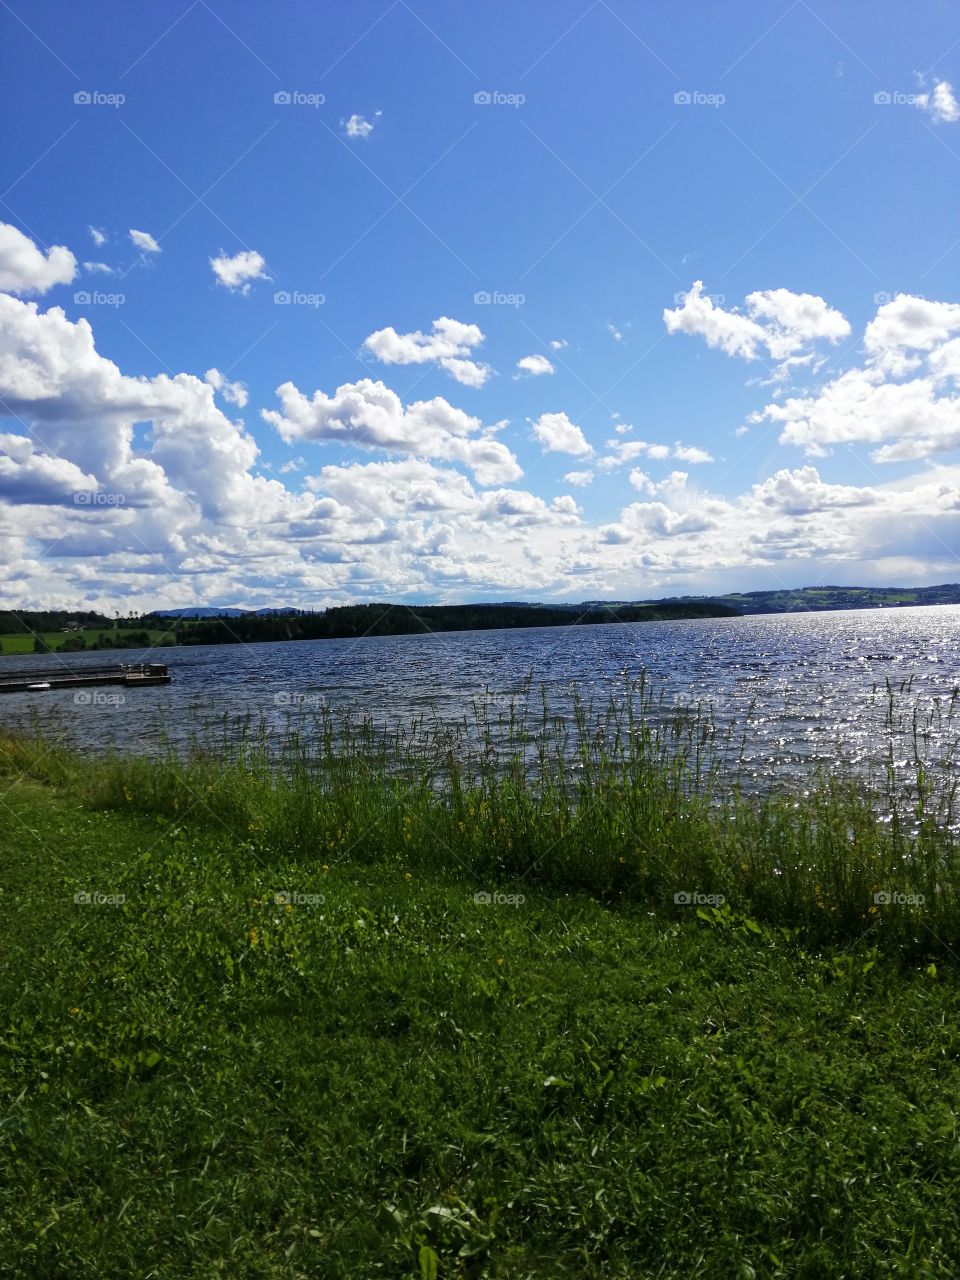 Mjøsa Norway's largest lake ❤️